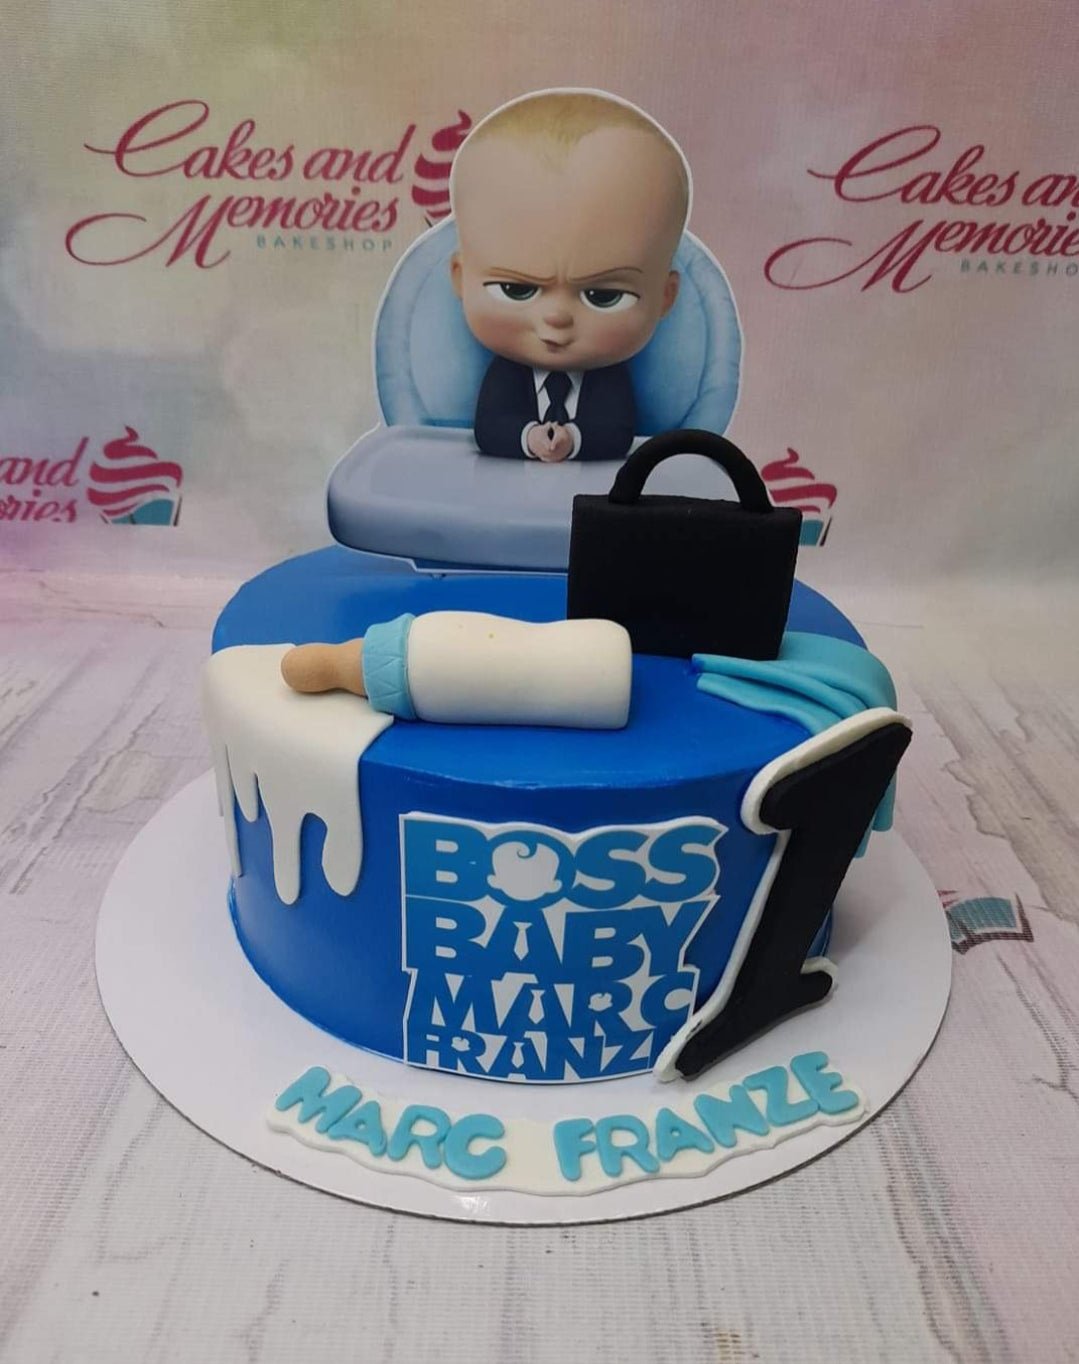 The Boss Baby Cake Topper | Printable – PimpYourWorld